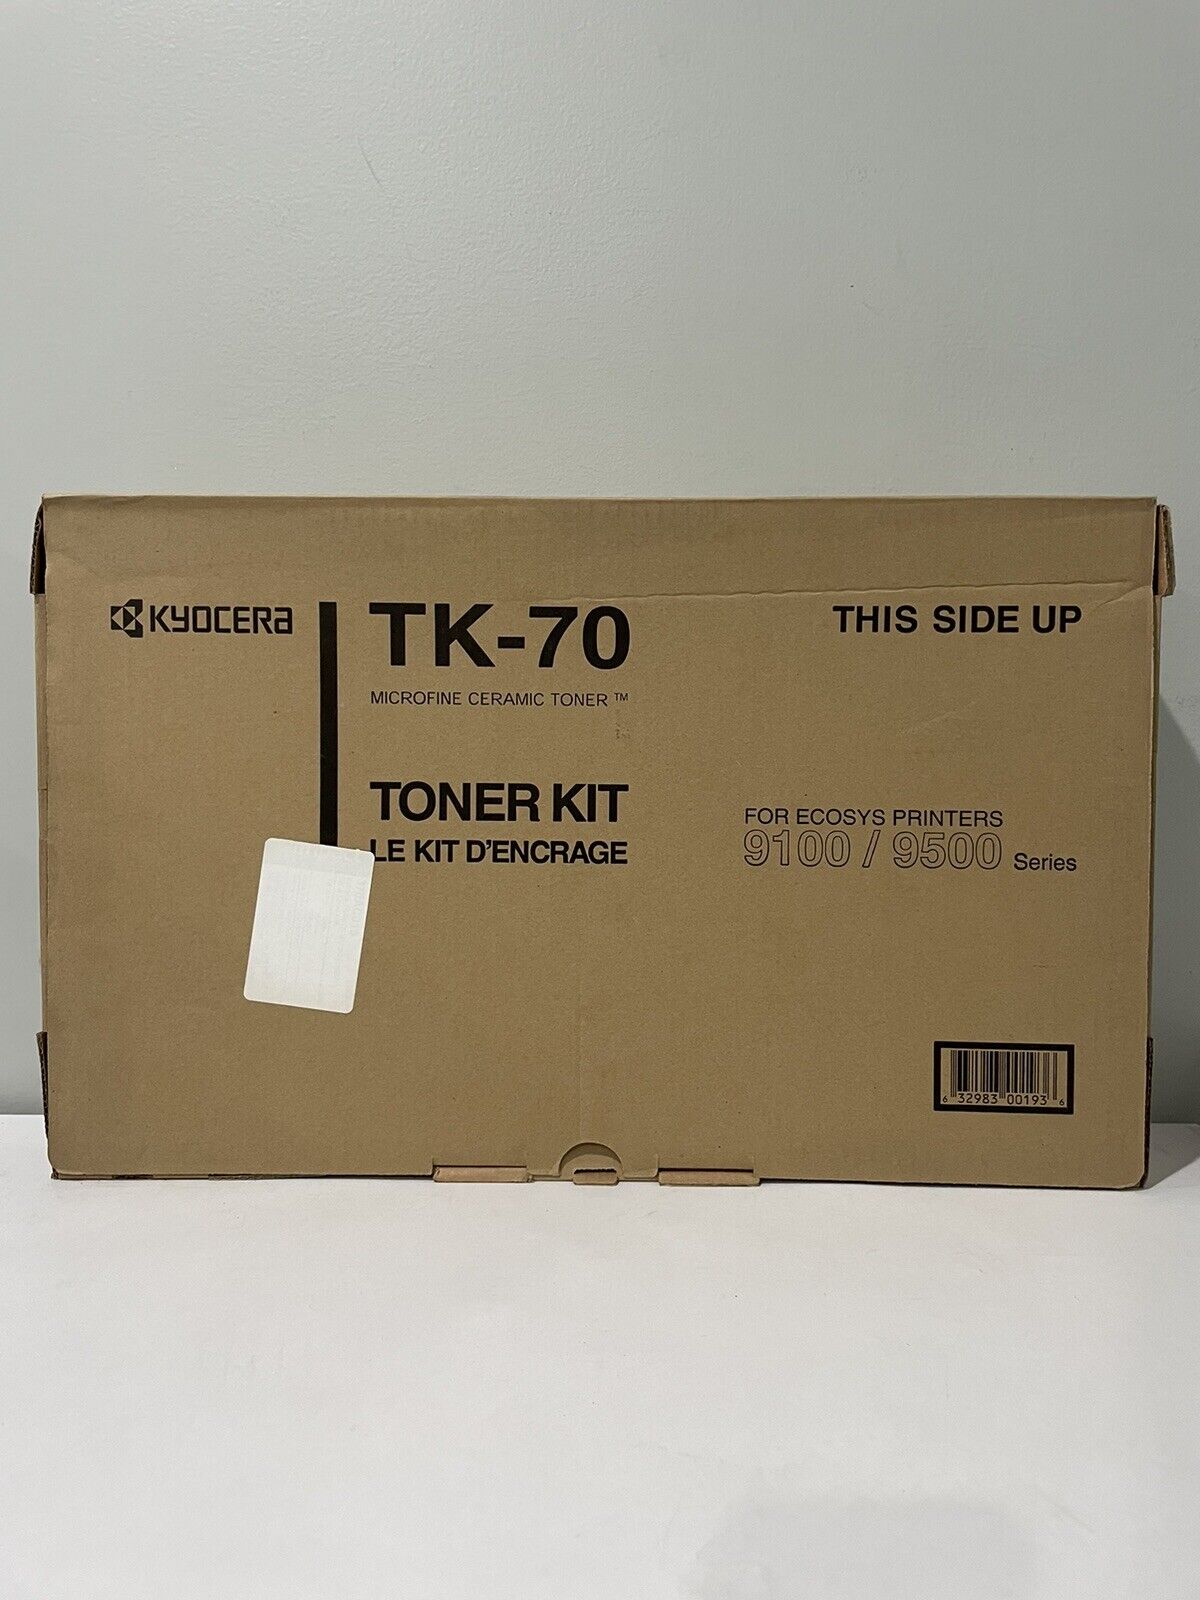 Genuine Kyocera TK-70 Toner Kit 370AC010001 for FS-9100 9500 Series New